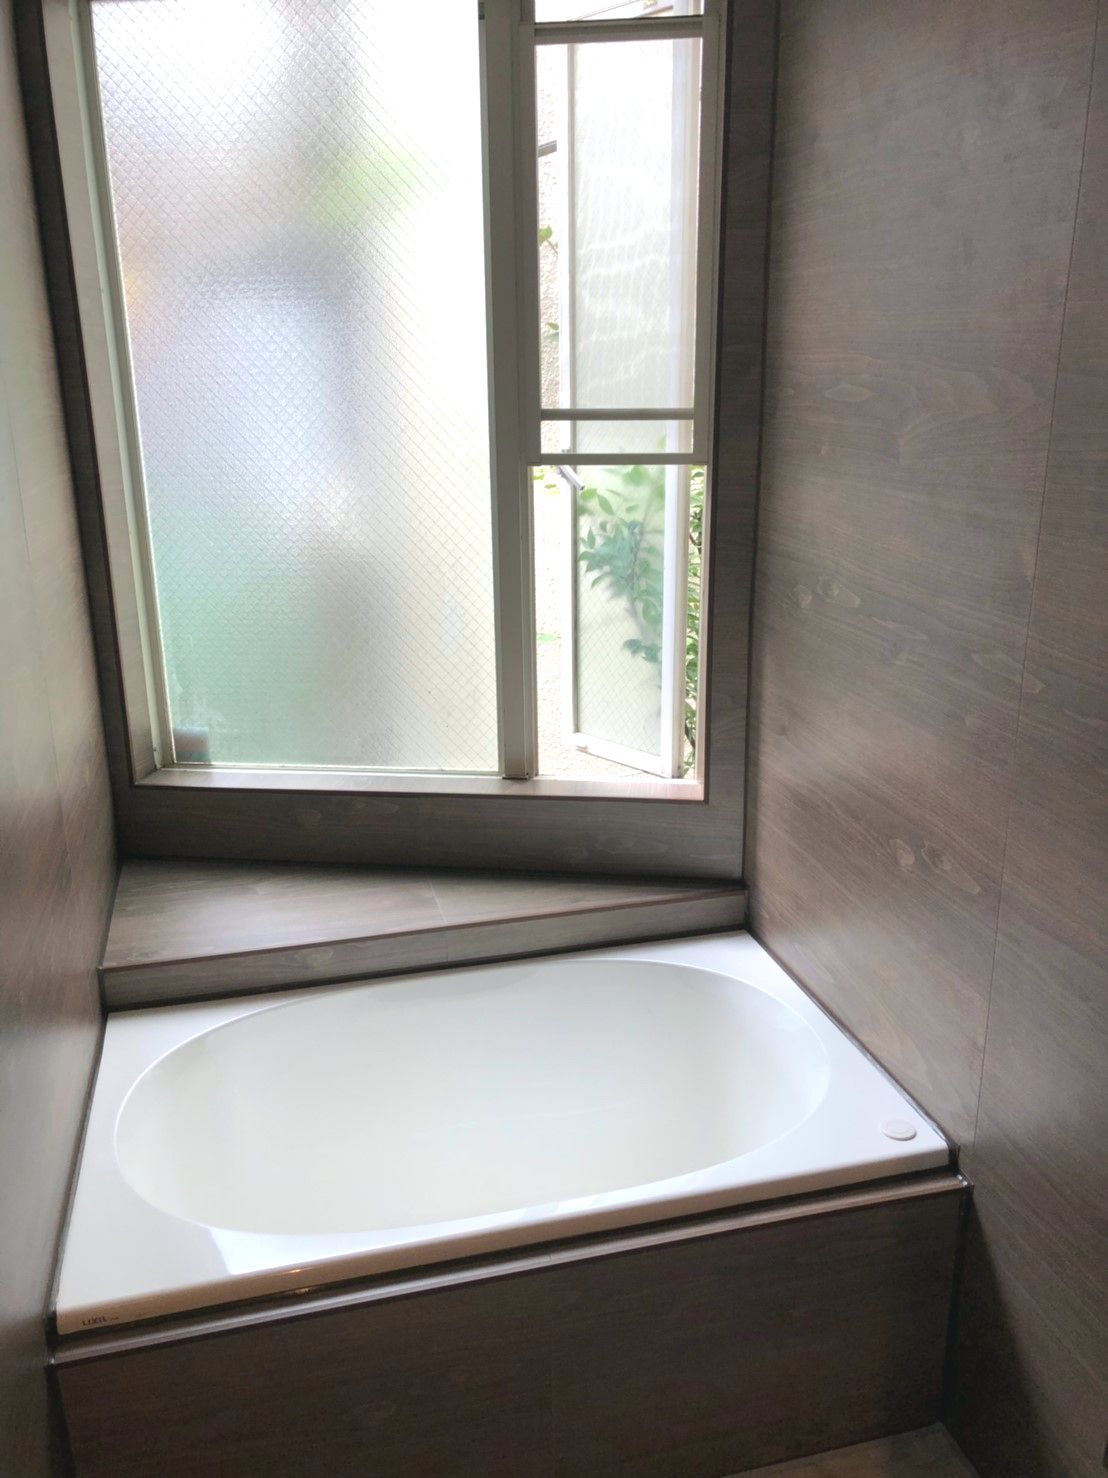 東京都世田谷区 浴室リフォーム工事 浴室一式改修